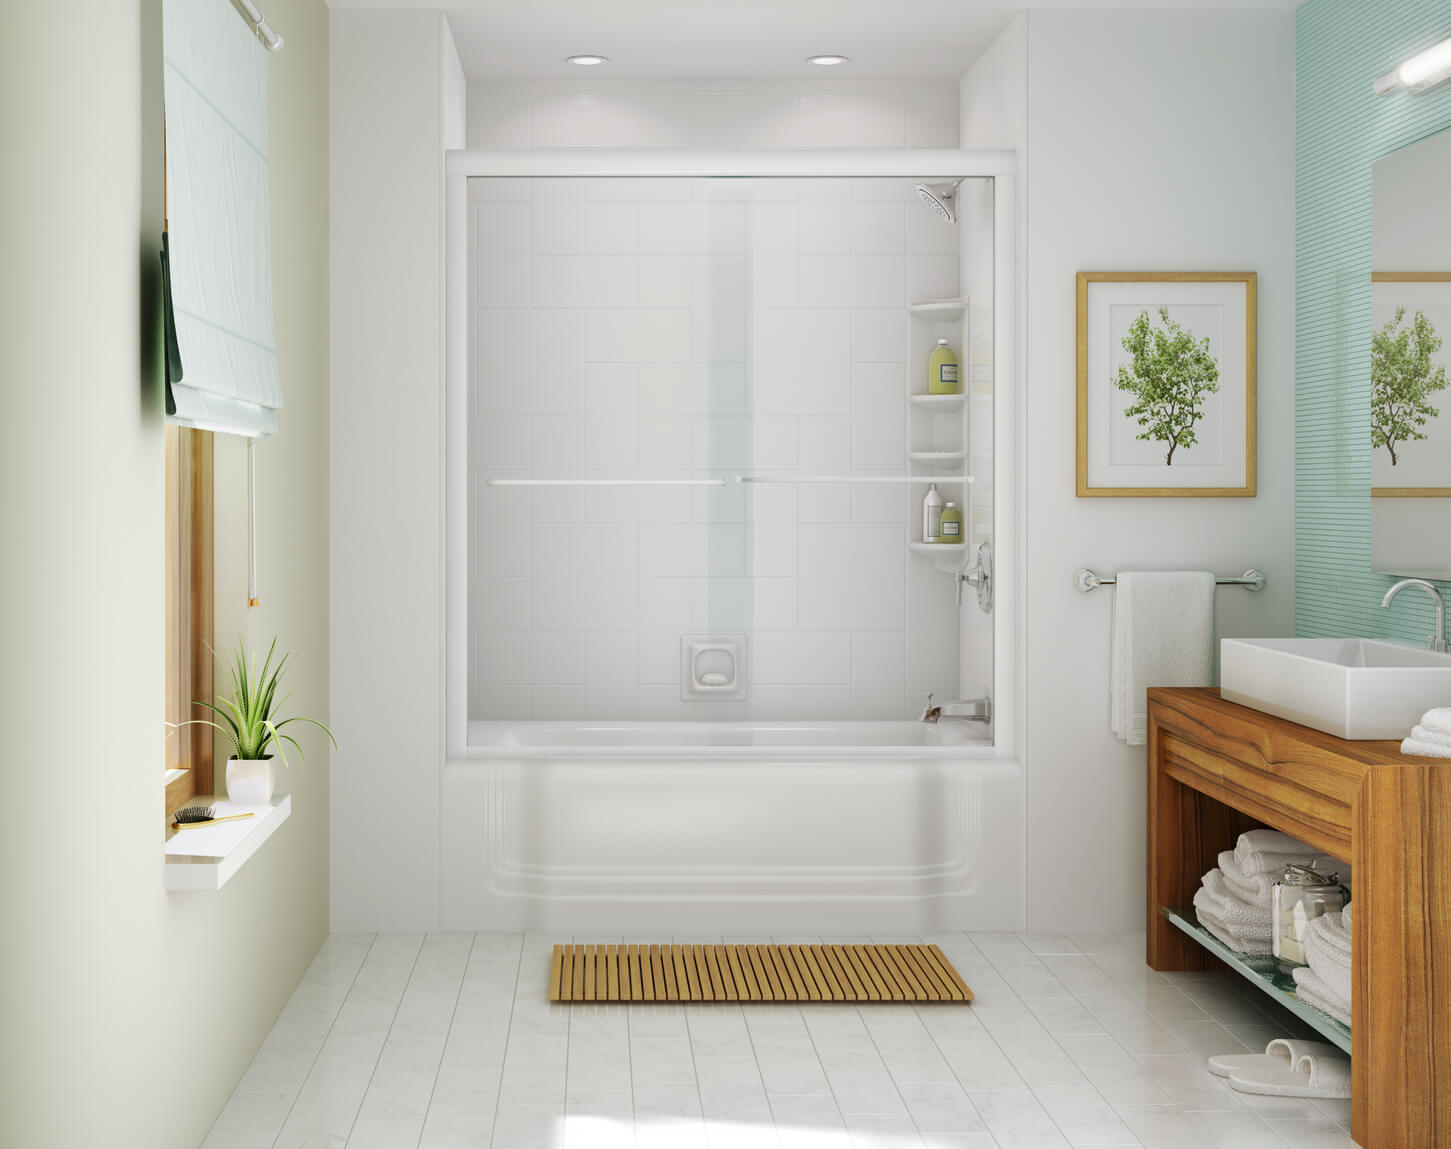 How to Create a Relaxing Master Bath - Calming Bathroom Designs